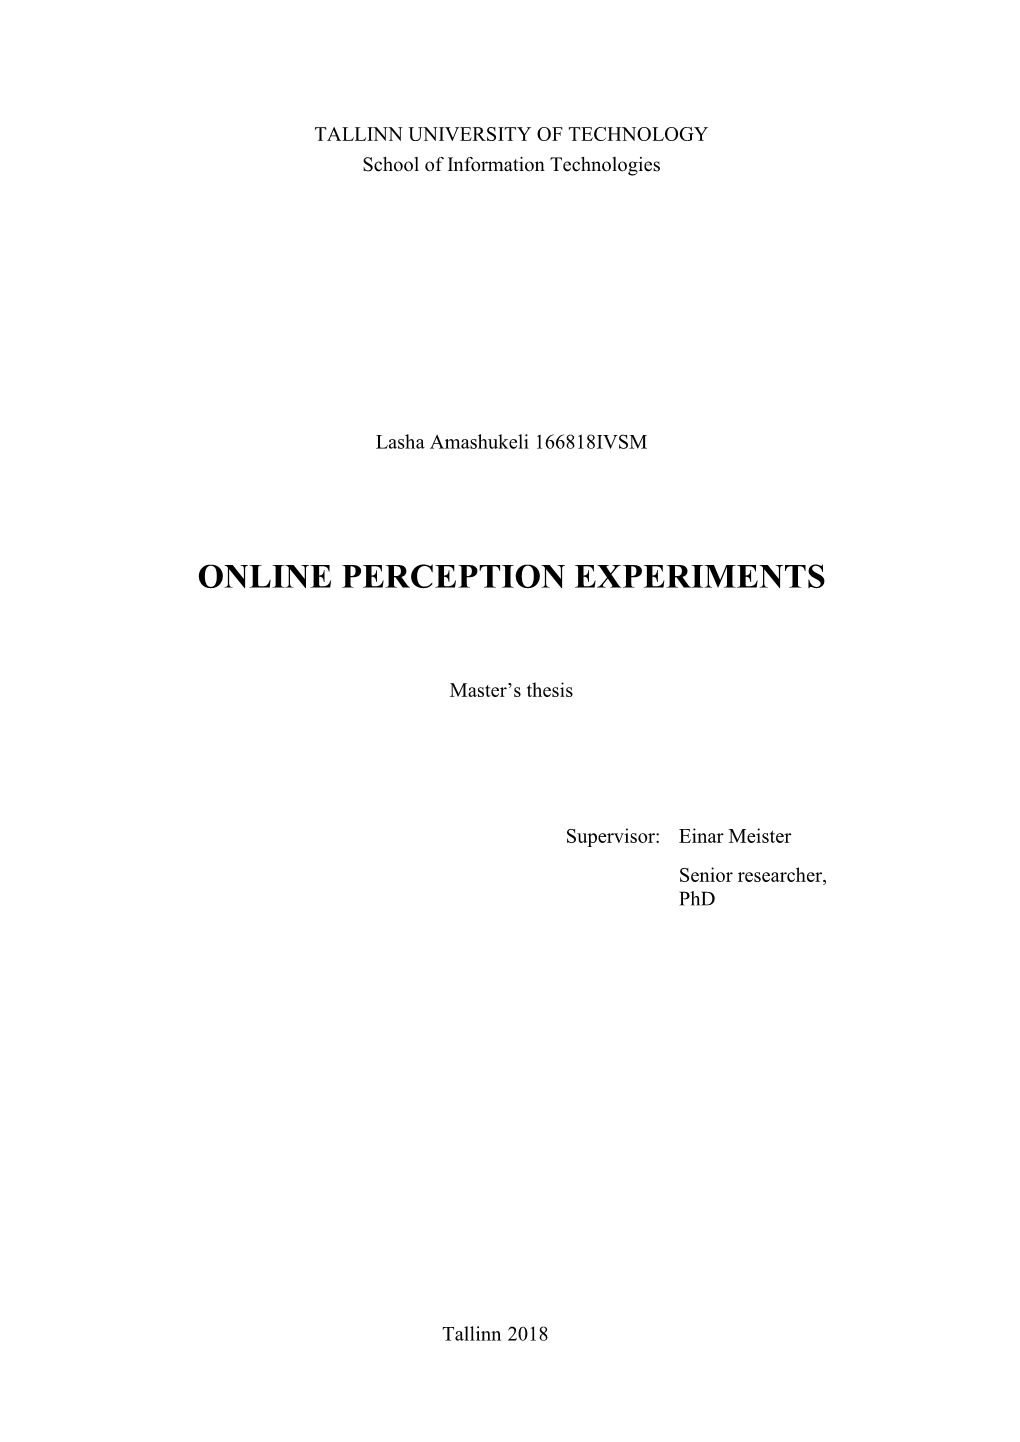 Online Perception Experiments